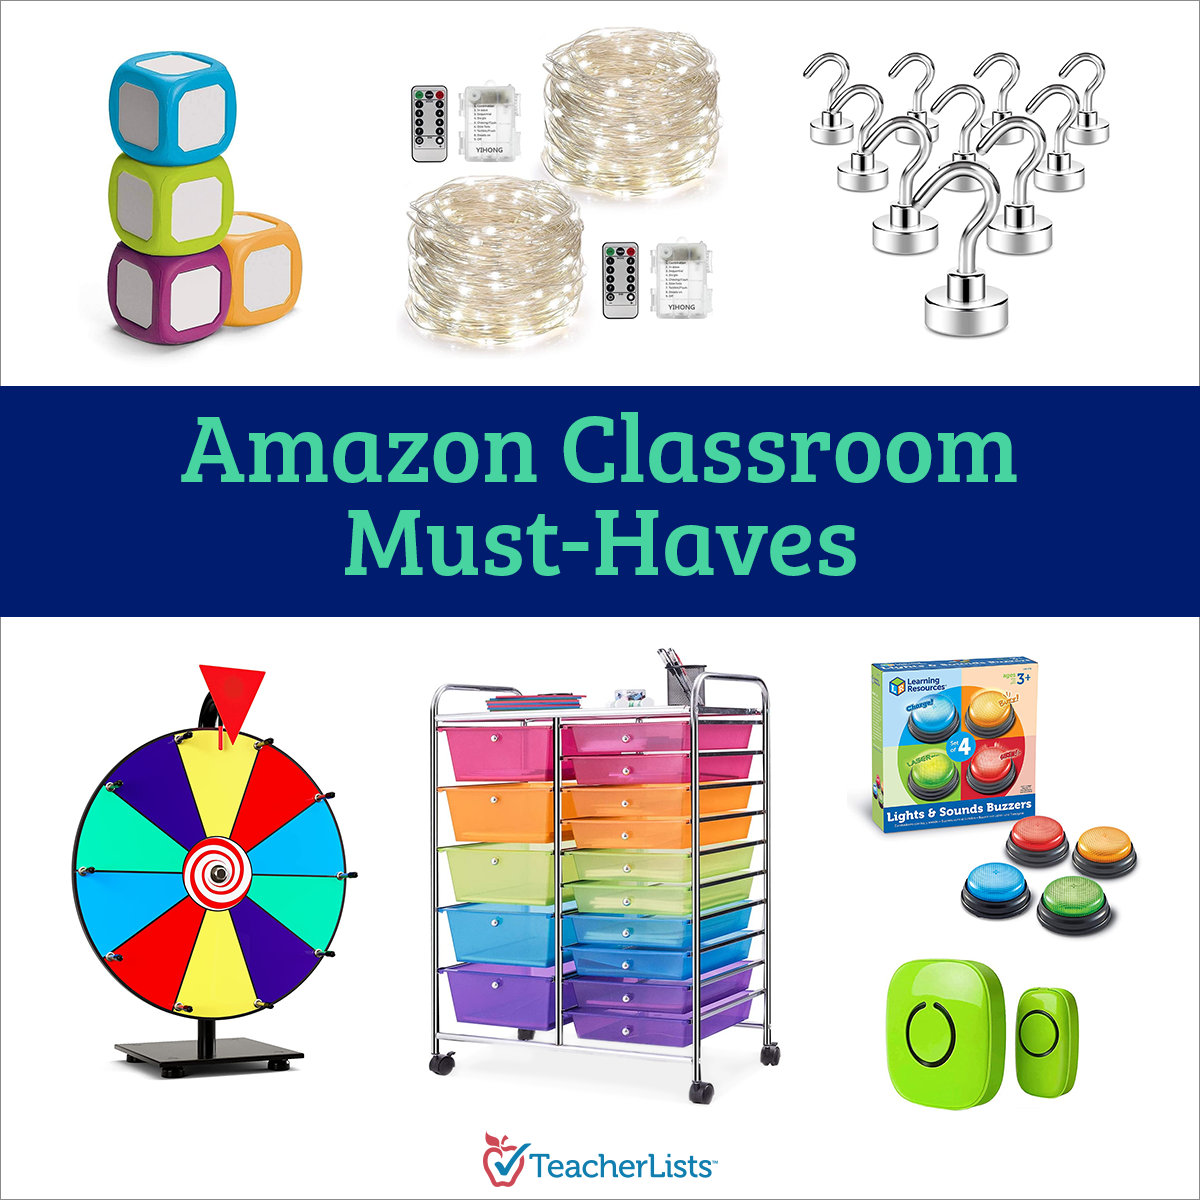 Amazon Classroom Must-Haves